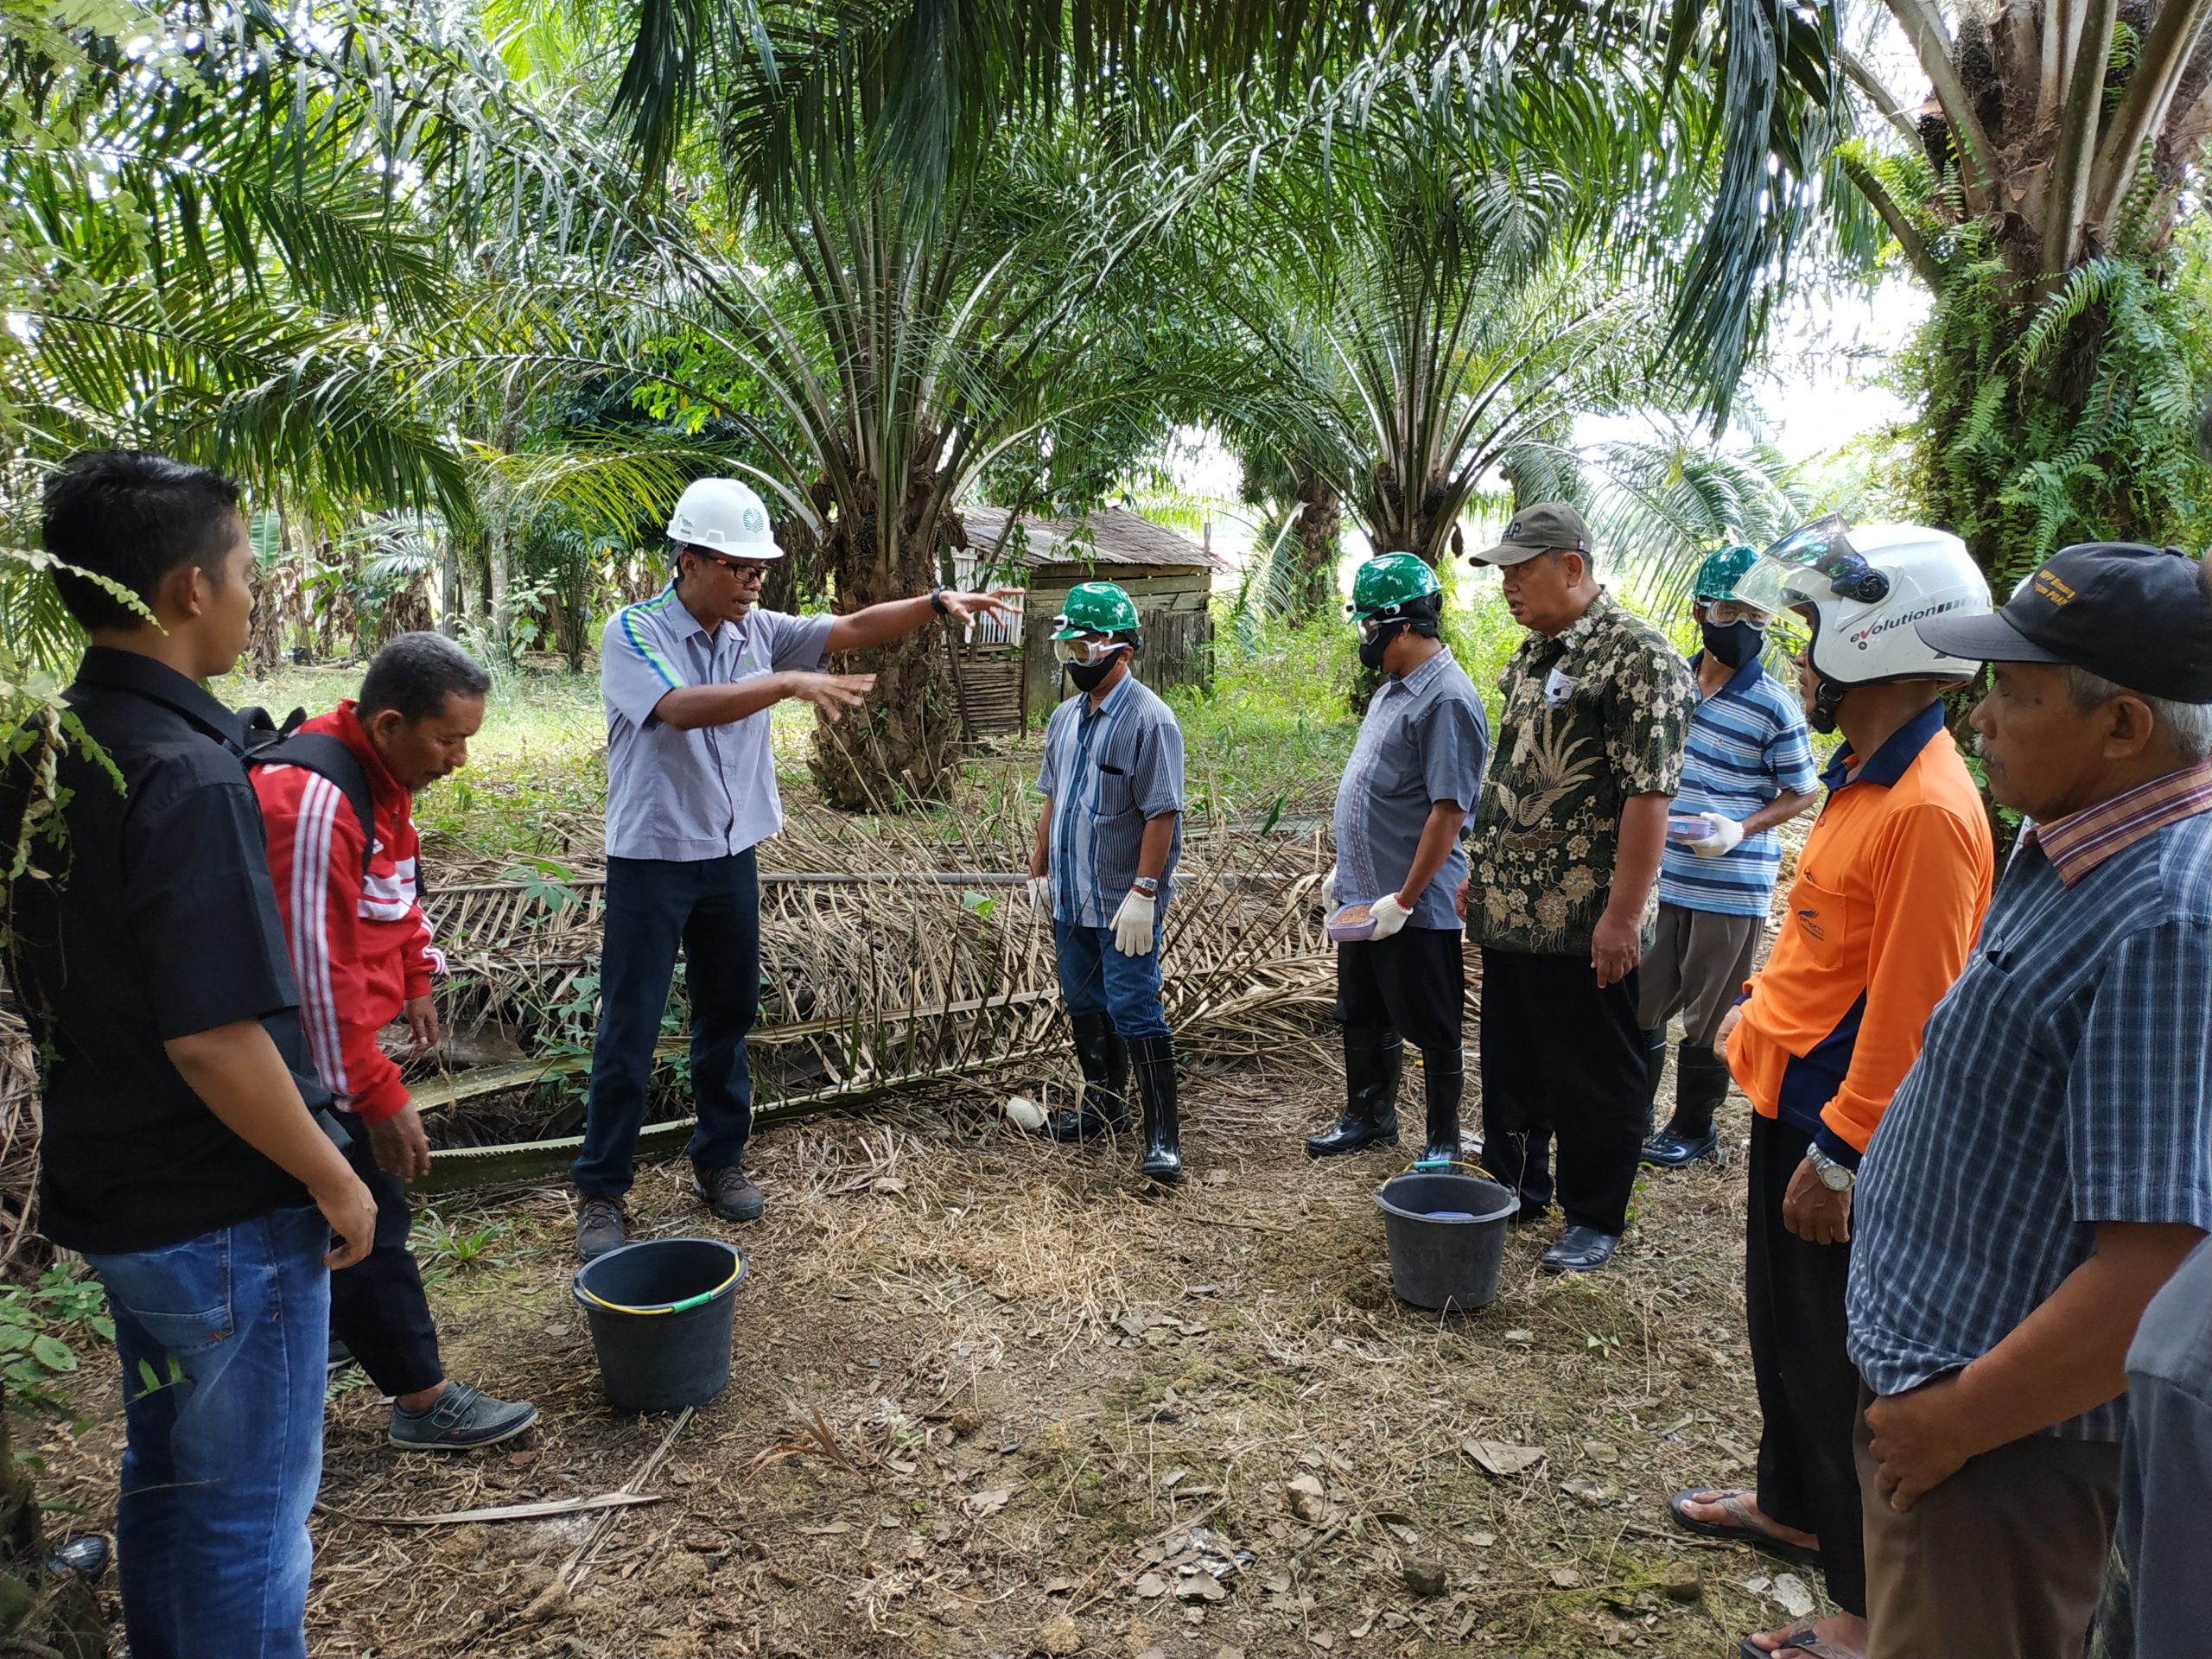 Independent smallholders who belong to the Asosiasi Petani Kelapa Sawit Mandiri cooperative in Central Kalimantan, Indonesia